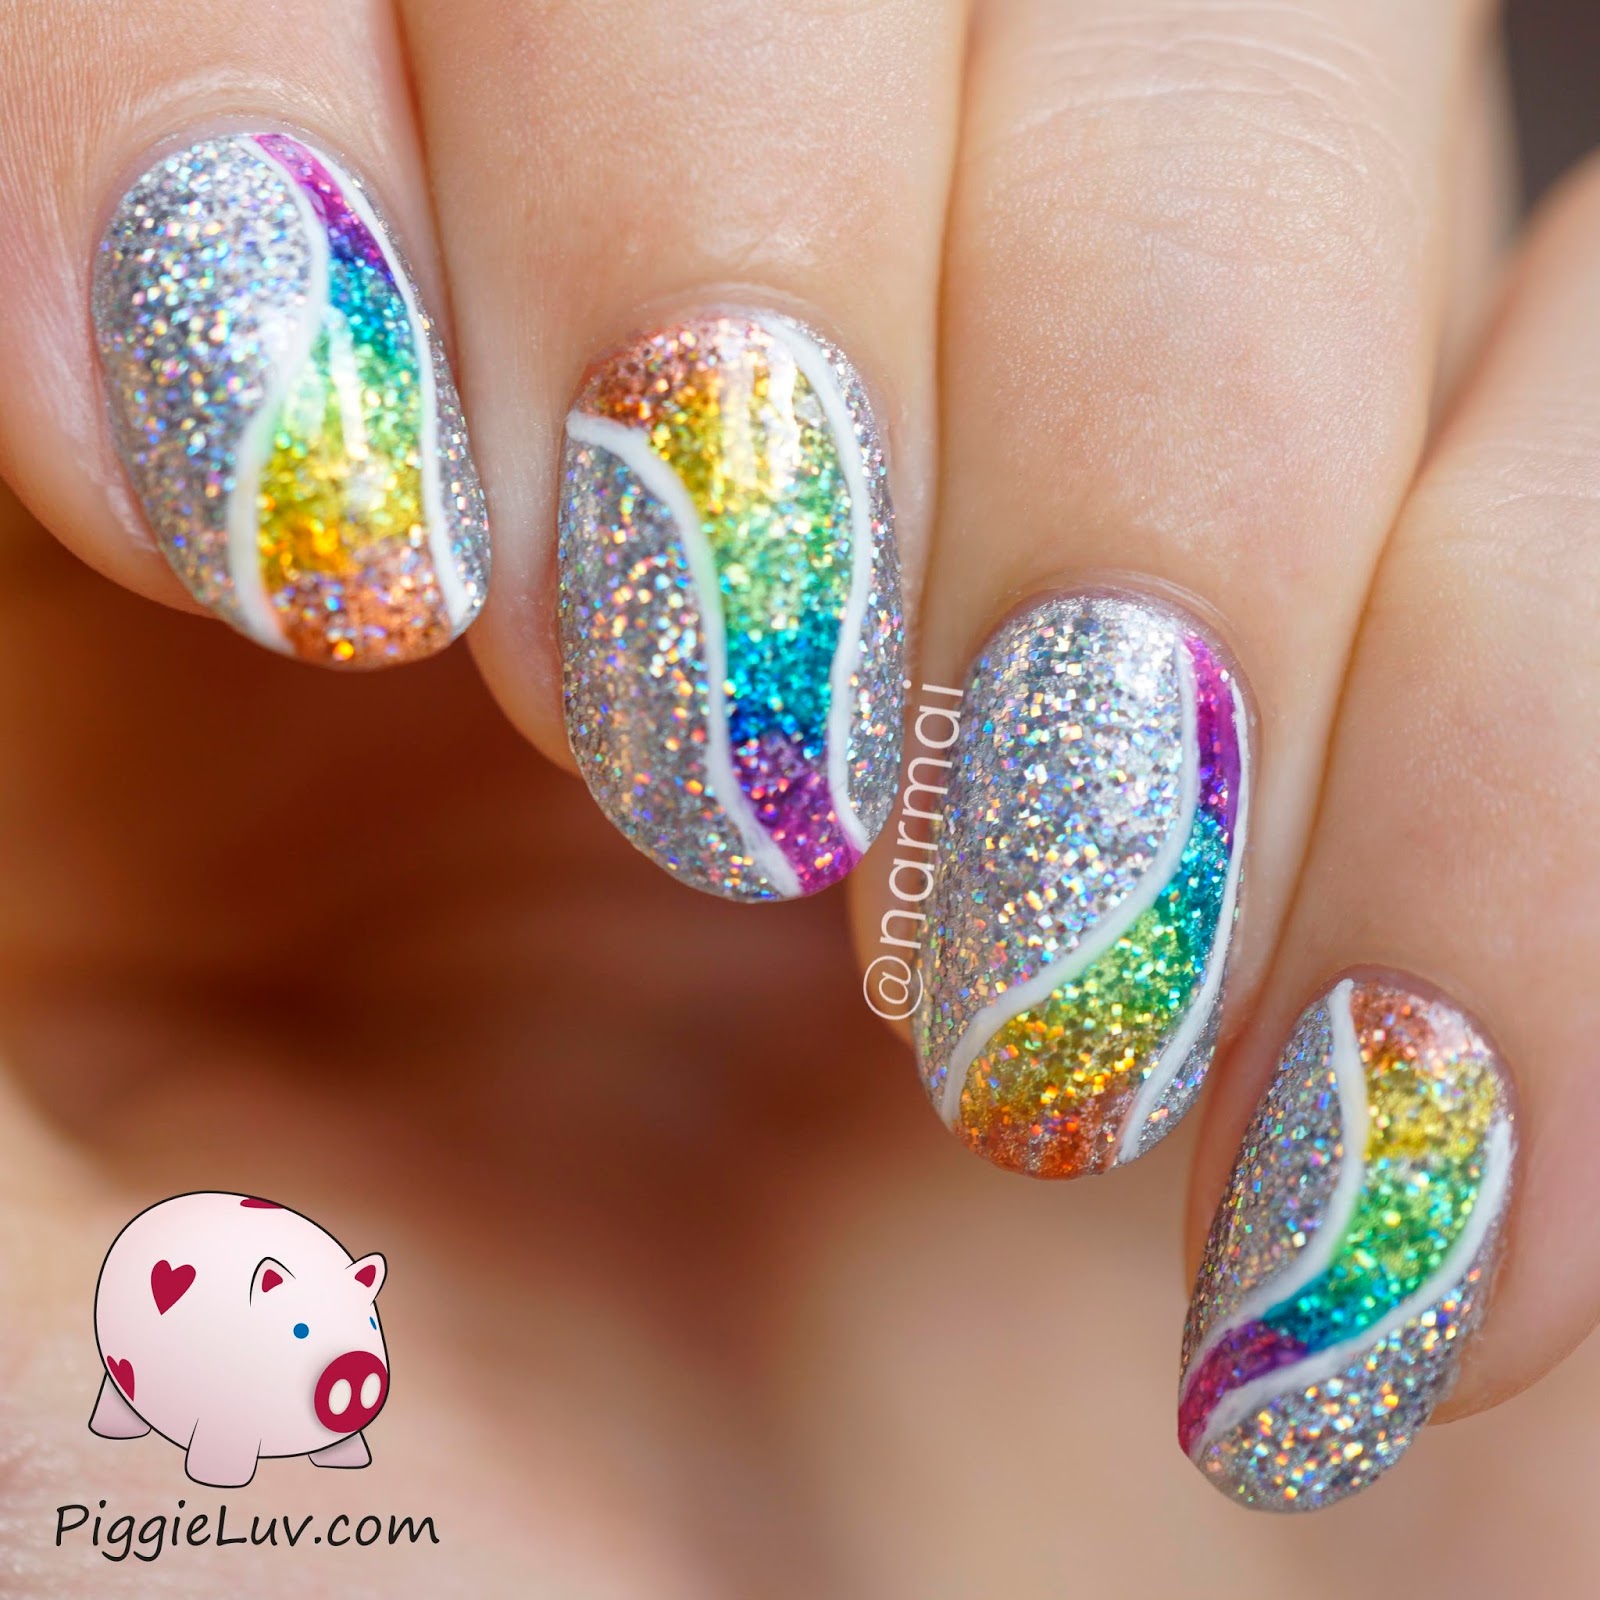 PiggieLuv Glitter tornado nail art with OPI Color Paints